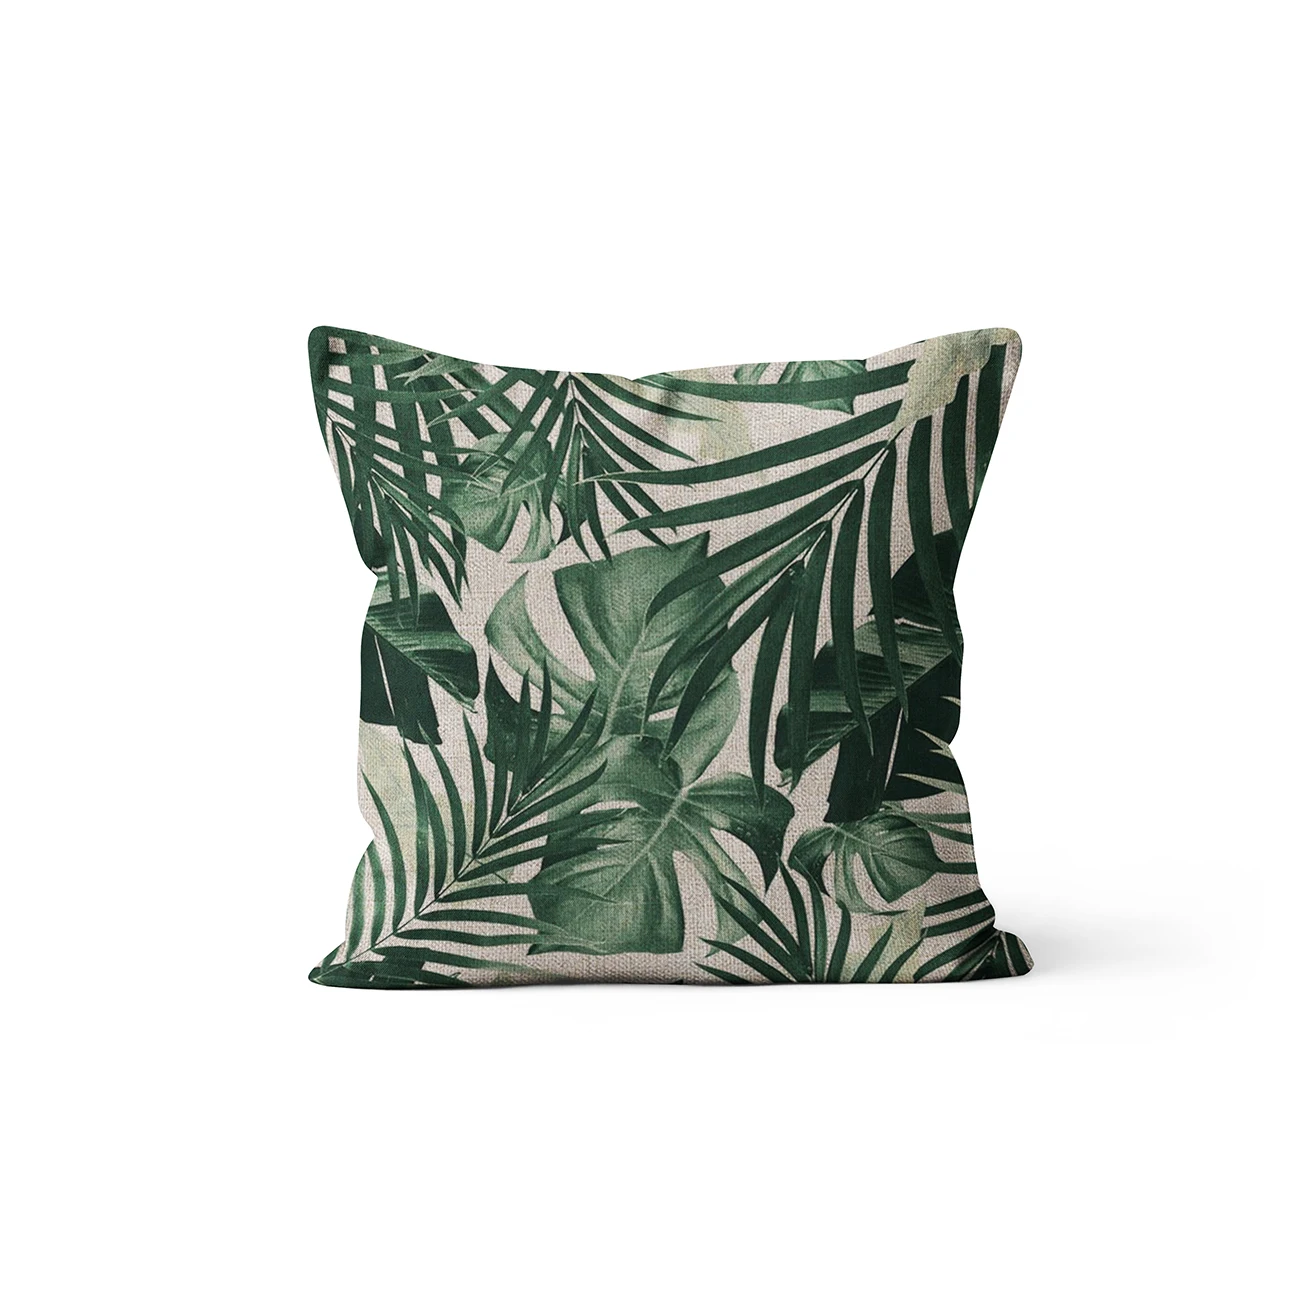 H7c32c2418dcc46f78eceb8aa4036b1461 Decorative Pillow Case Green Throw Pillowcase Decor Home Farmhouse Scandinavian Style 45*45 40*40 Nordic Sofa Cushion Cover